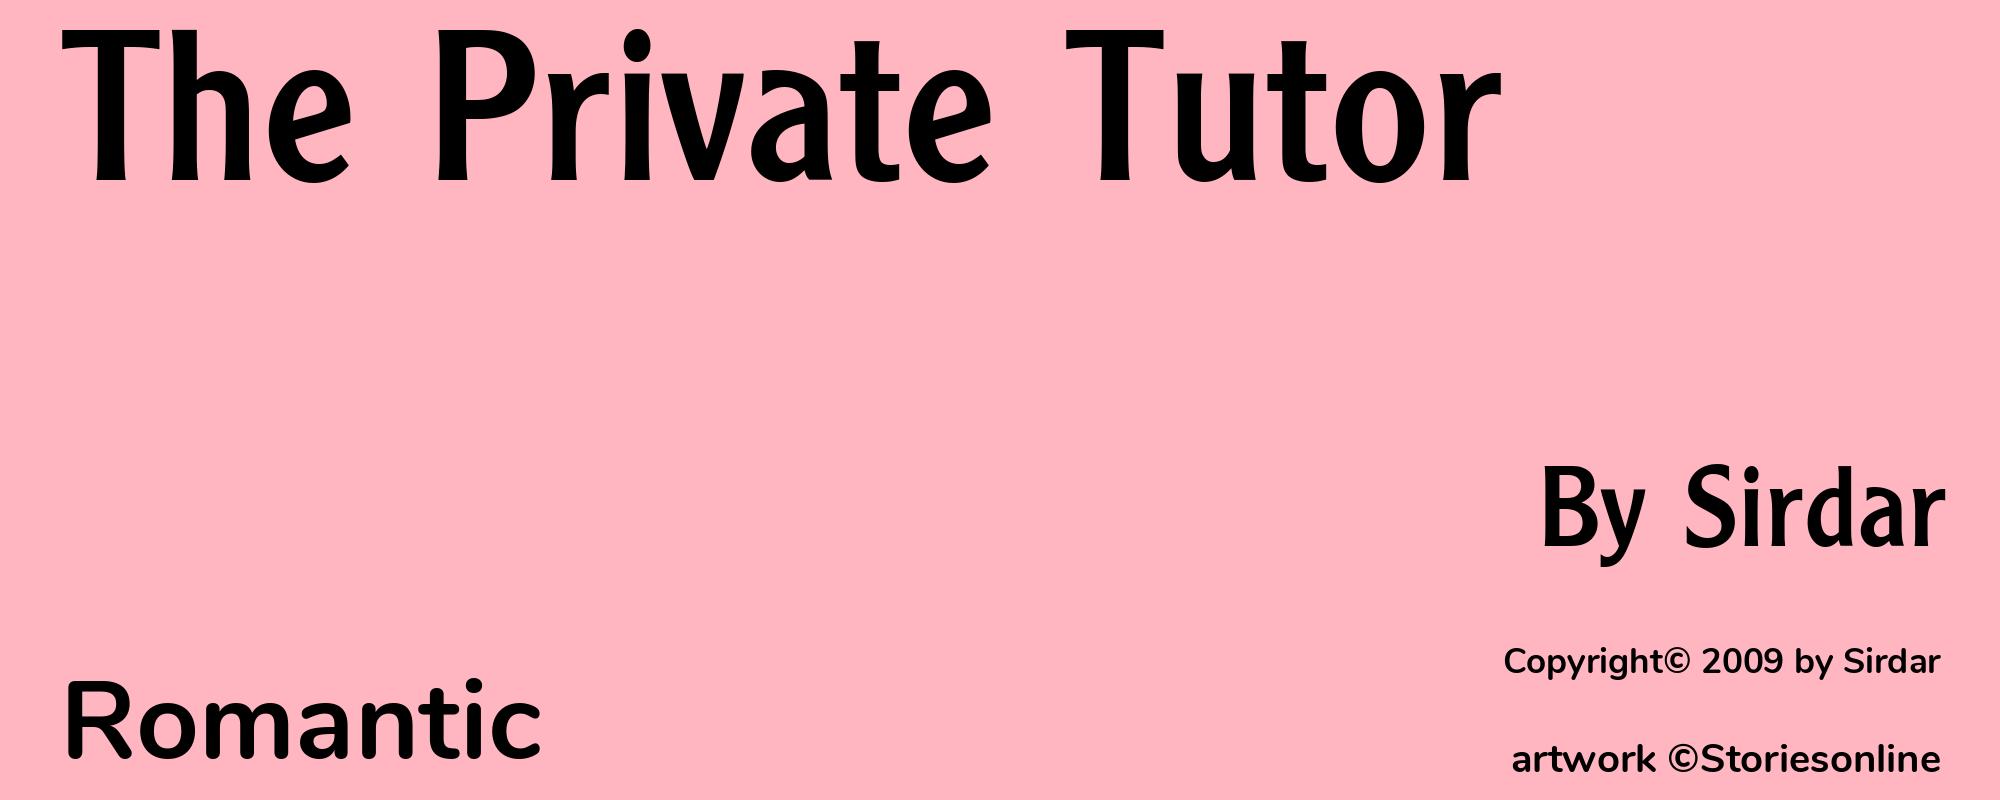 The Private Tutor - Cover